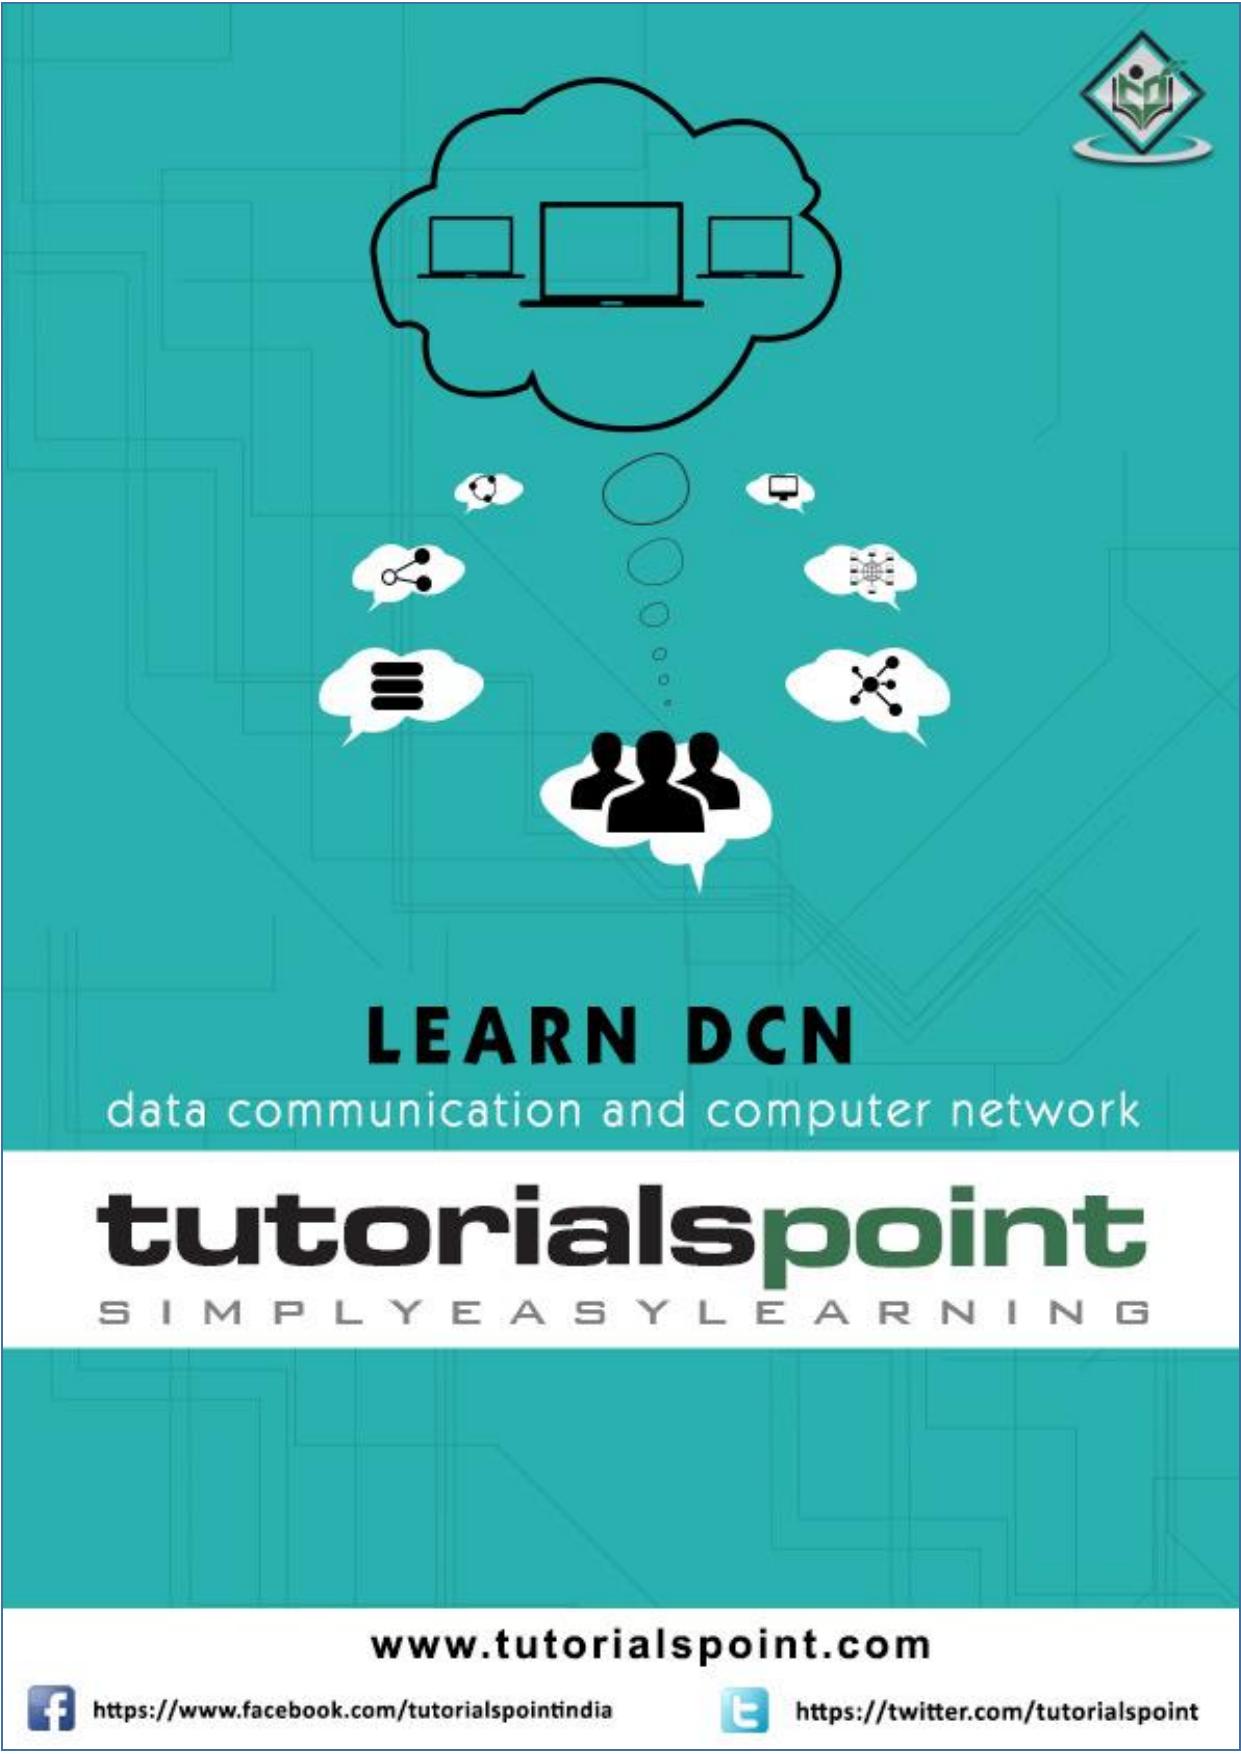 Data Communication and Computer Network TUTORIALS 2014( PDFDrive.com )